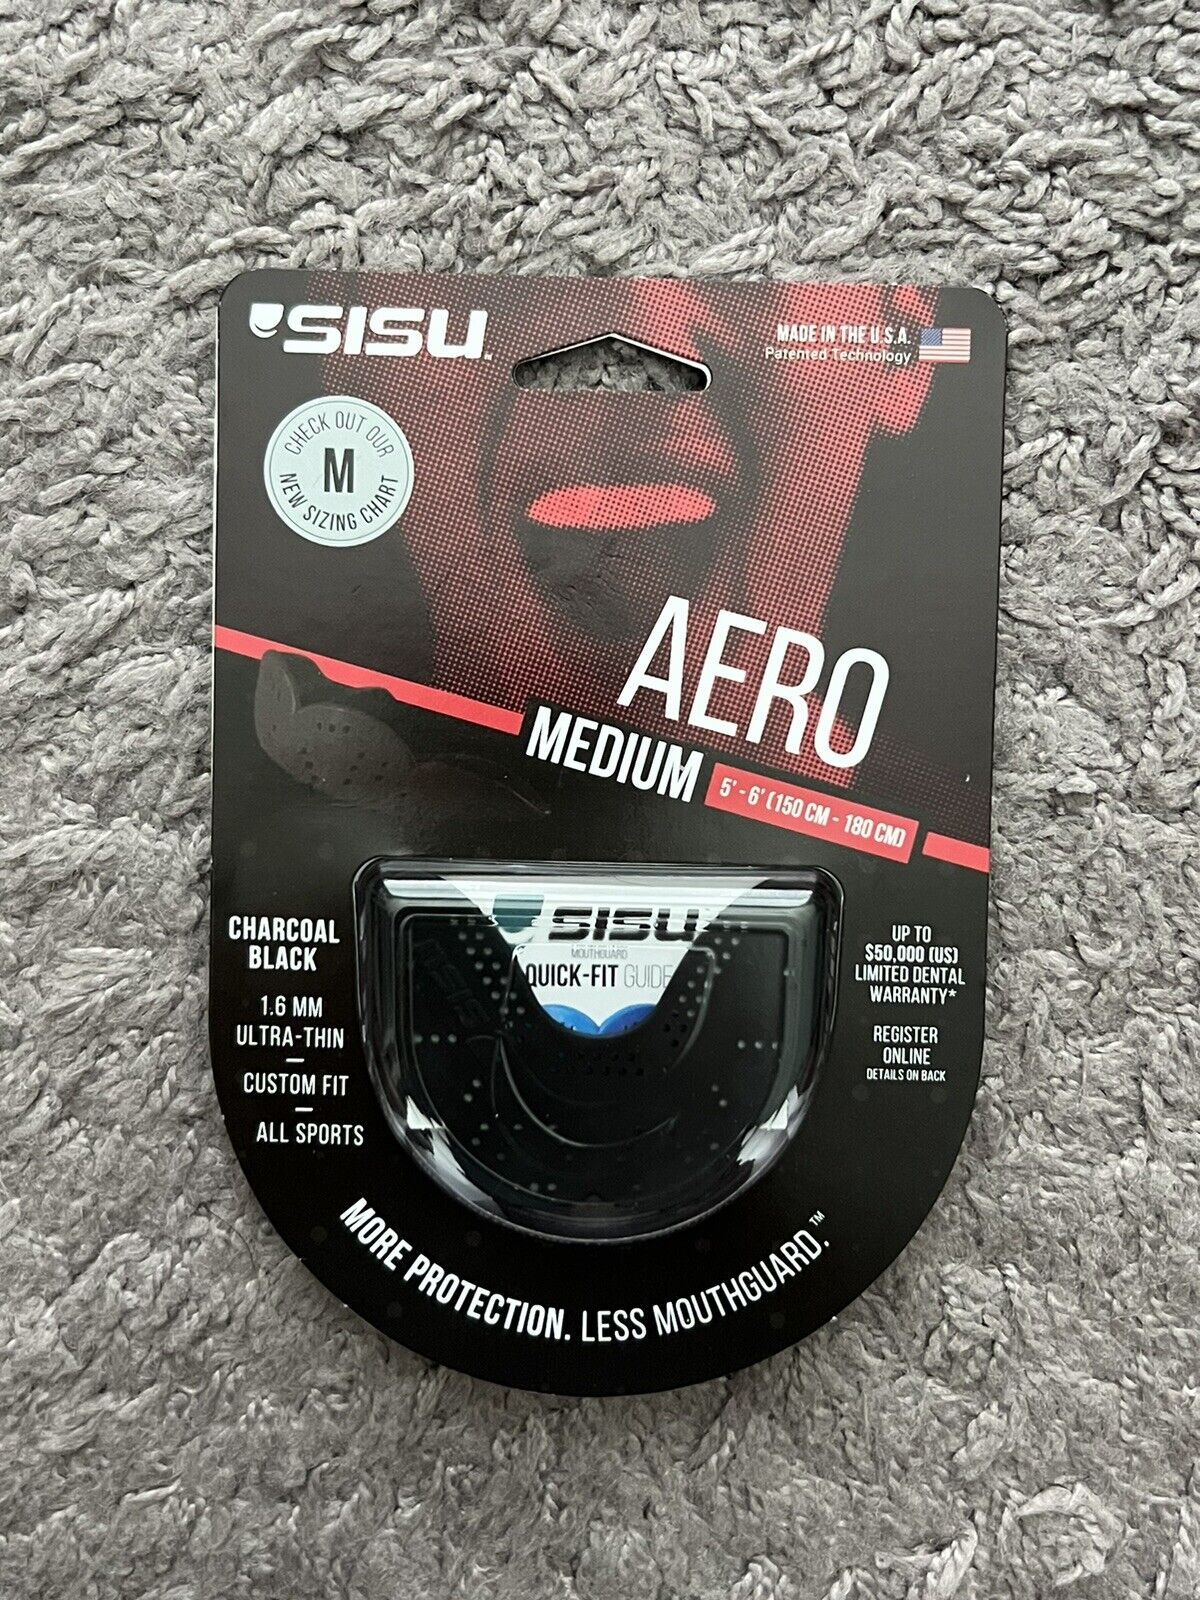  SISU Go Mouthguard, Charcoal Black - 1.6mm Thin